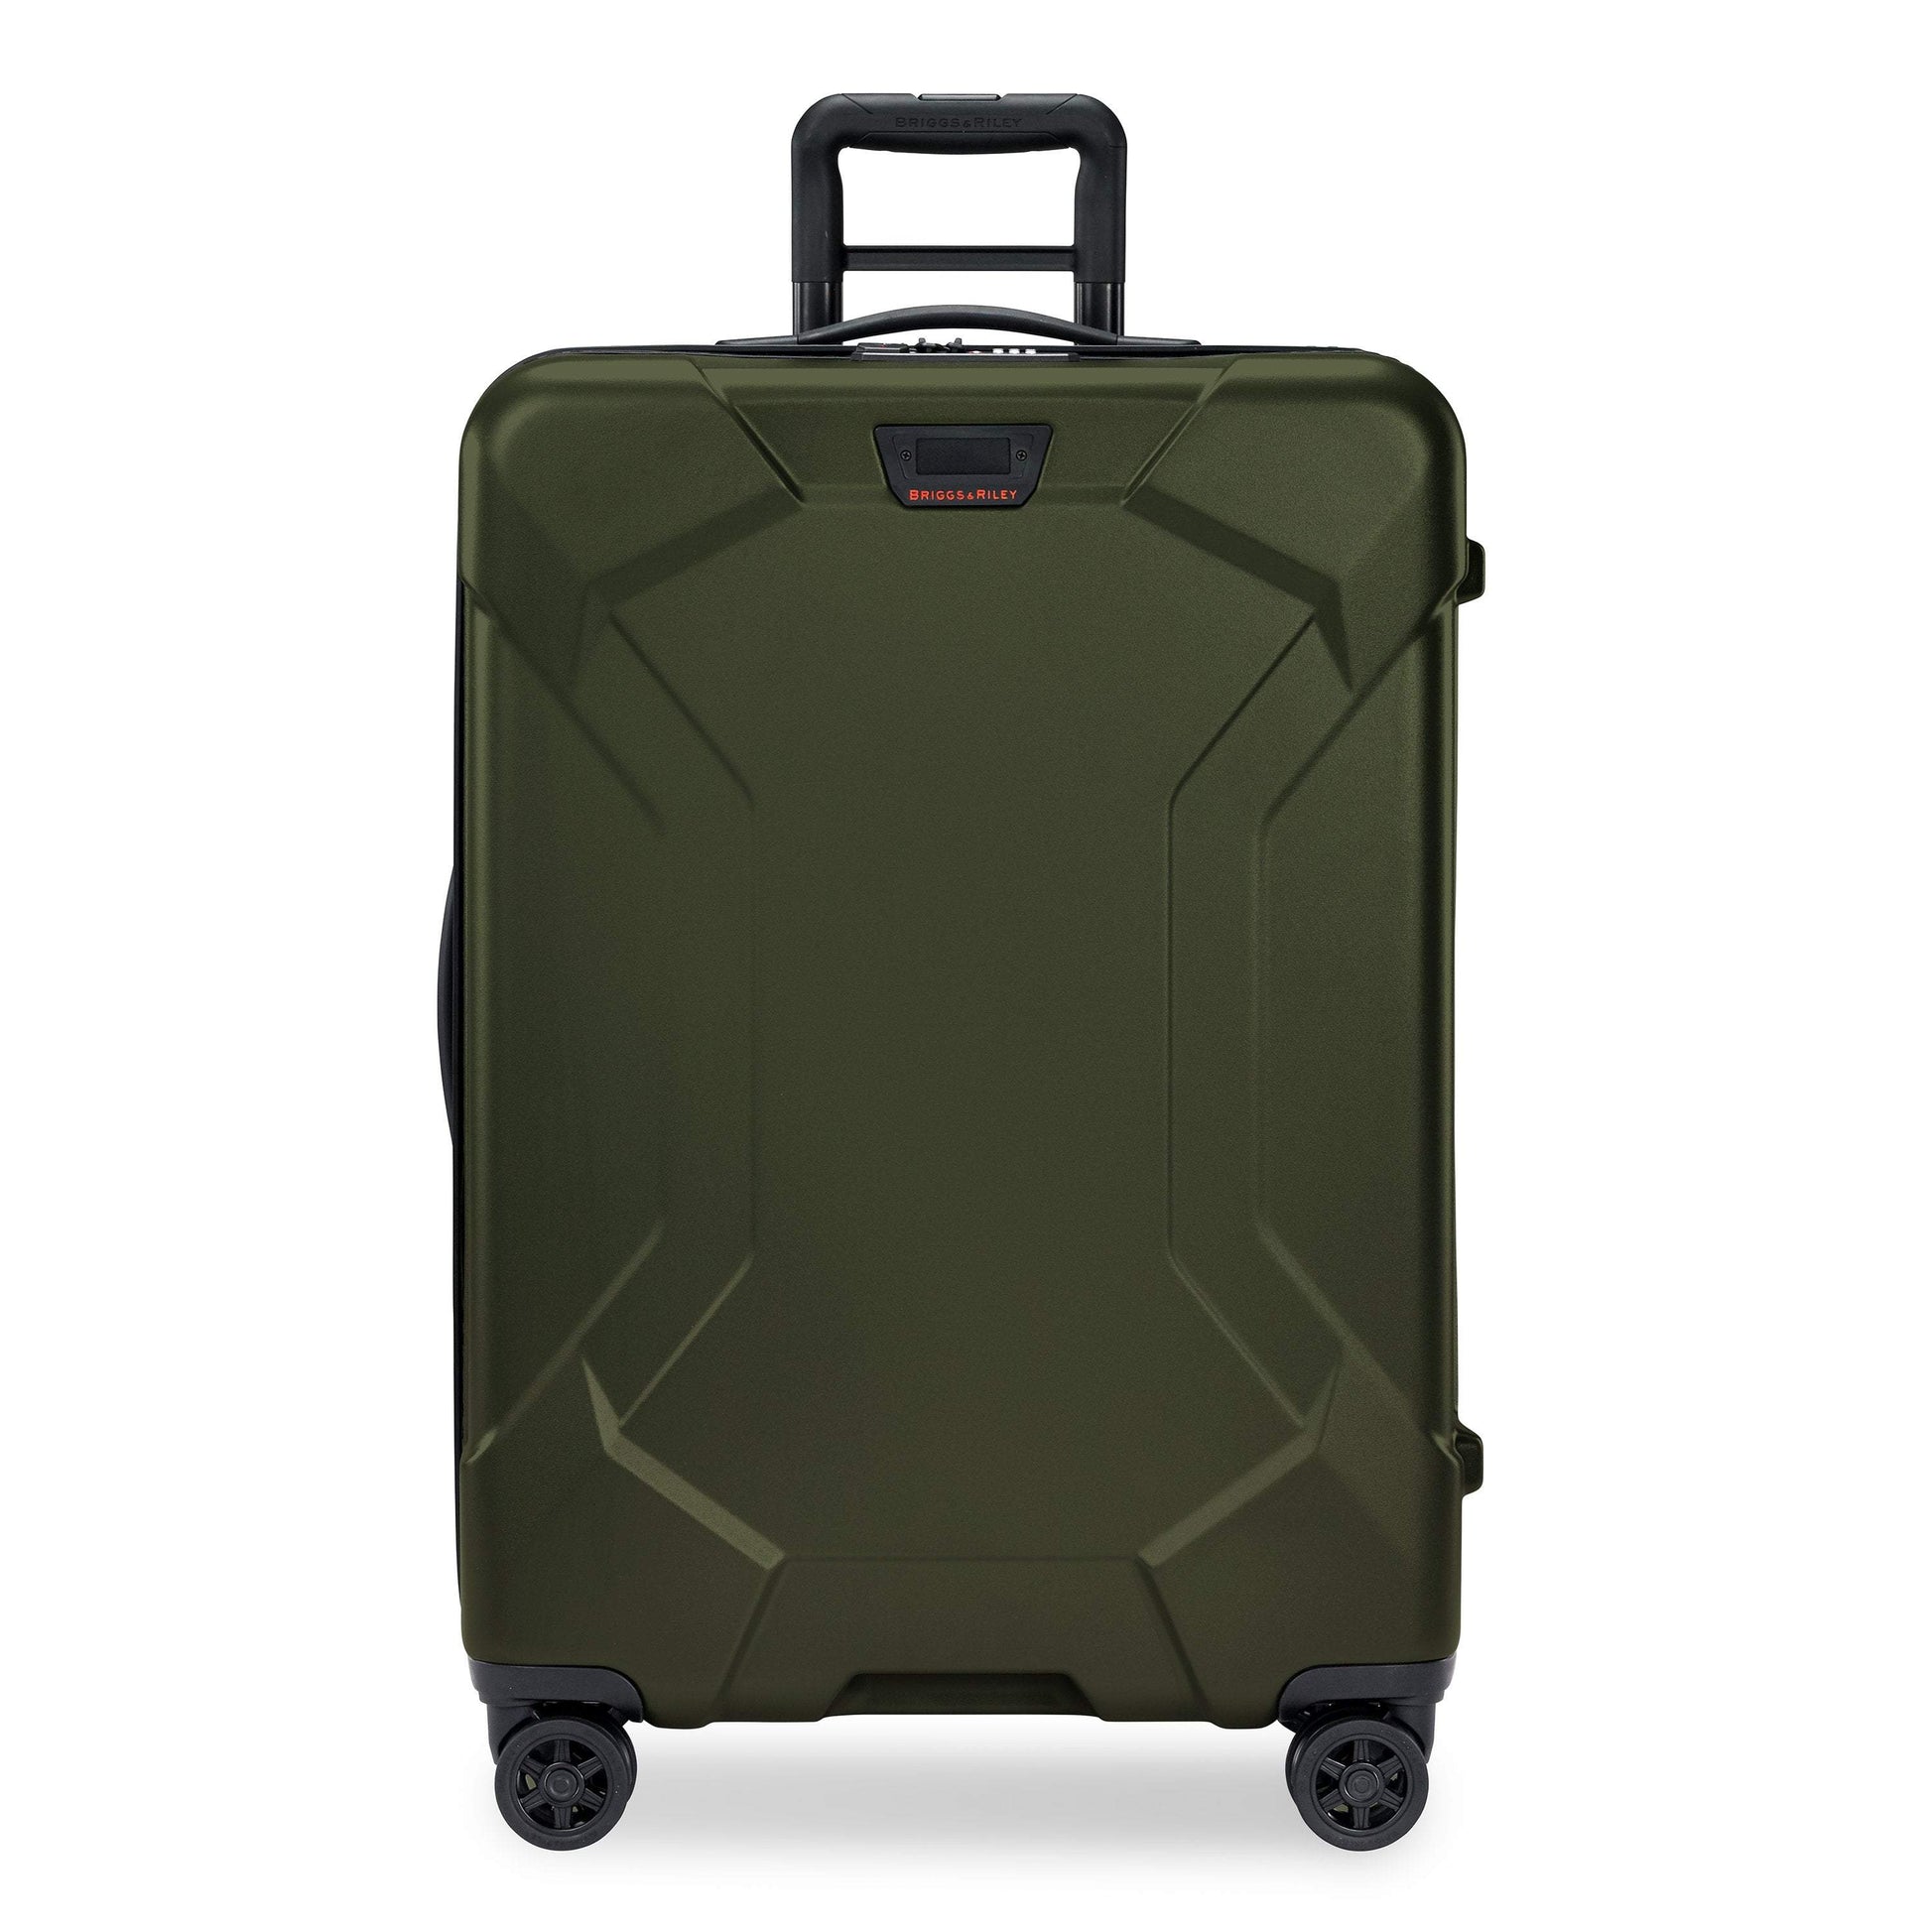 Briggs & Riley Torq Medium Spinner Luggage - Hunter